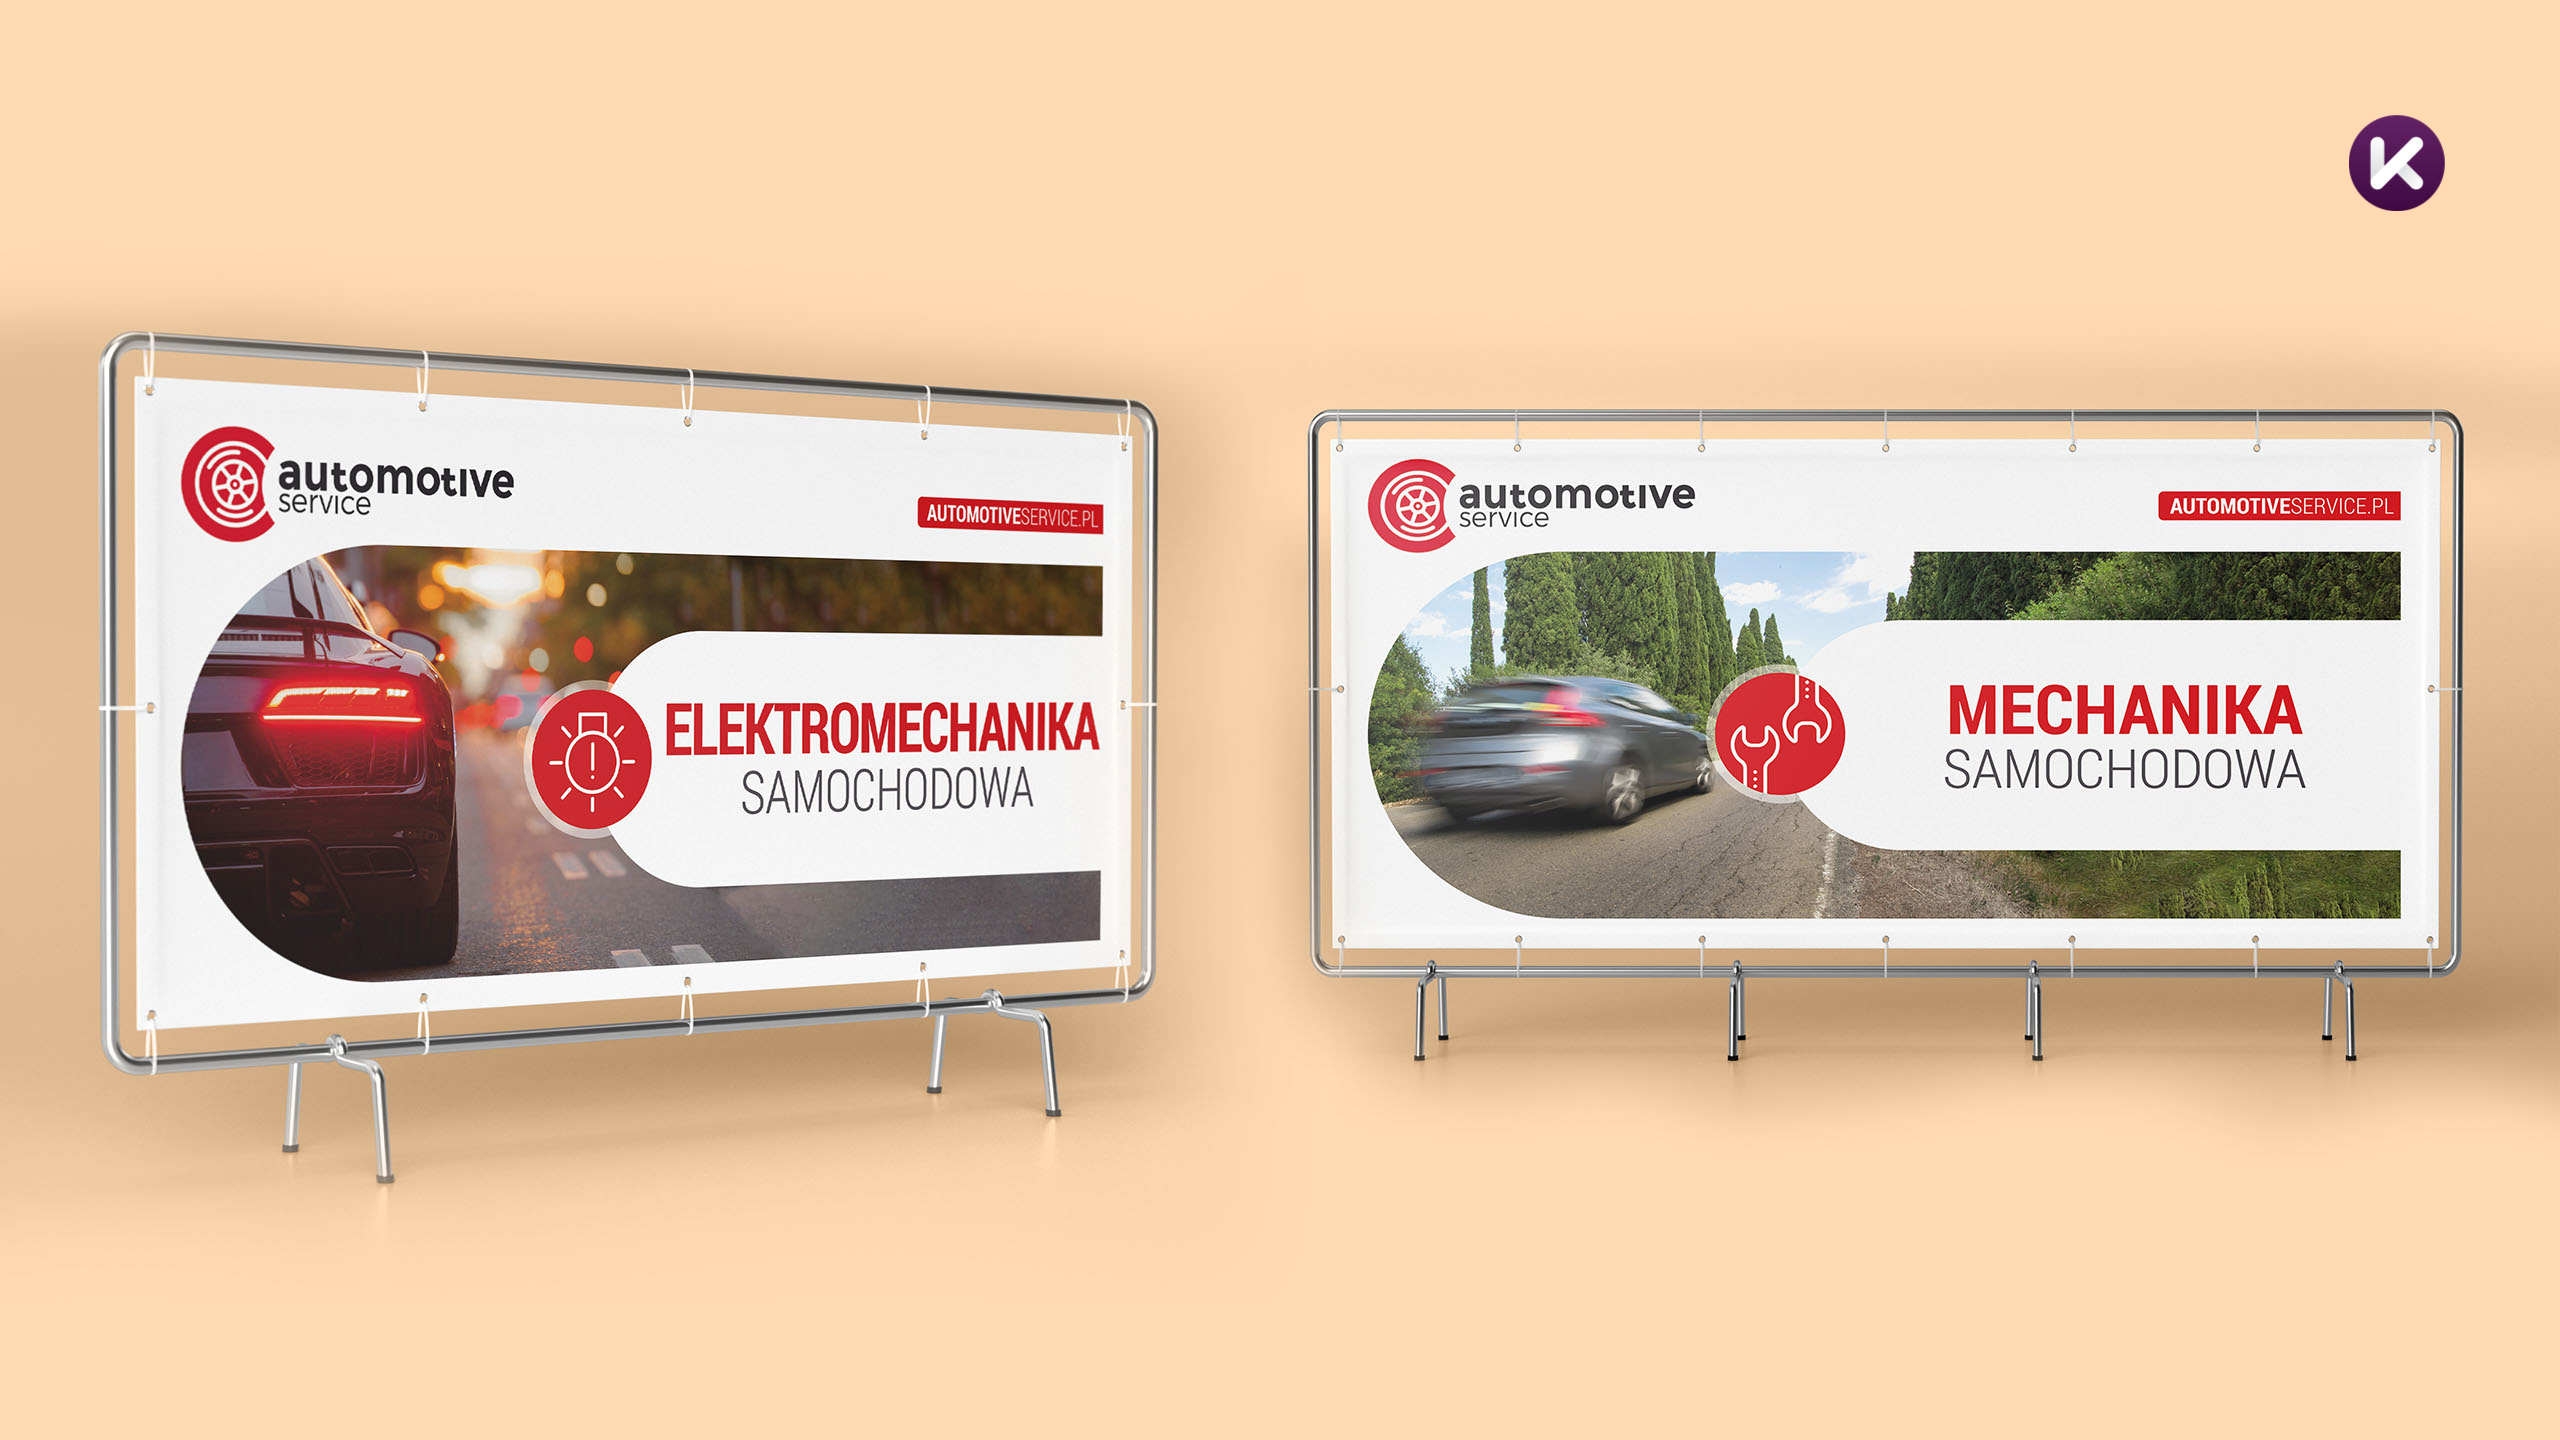 Baner reklamowy Automotive Service - Elektromechanika samochodowa